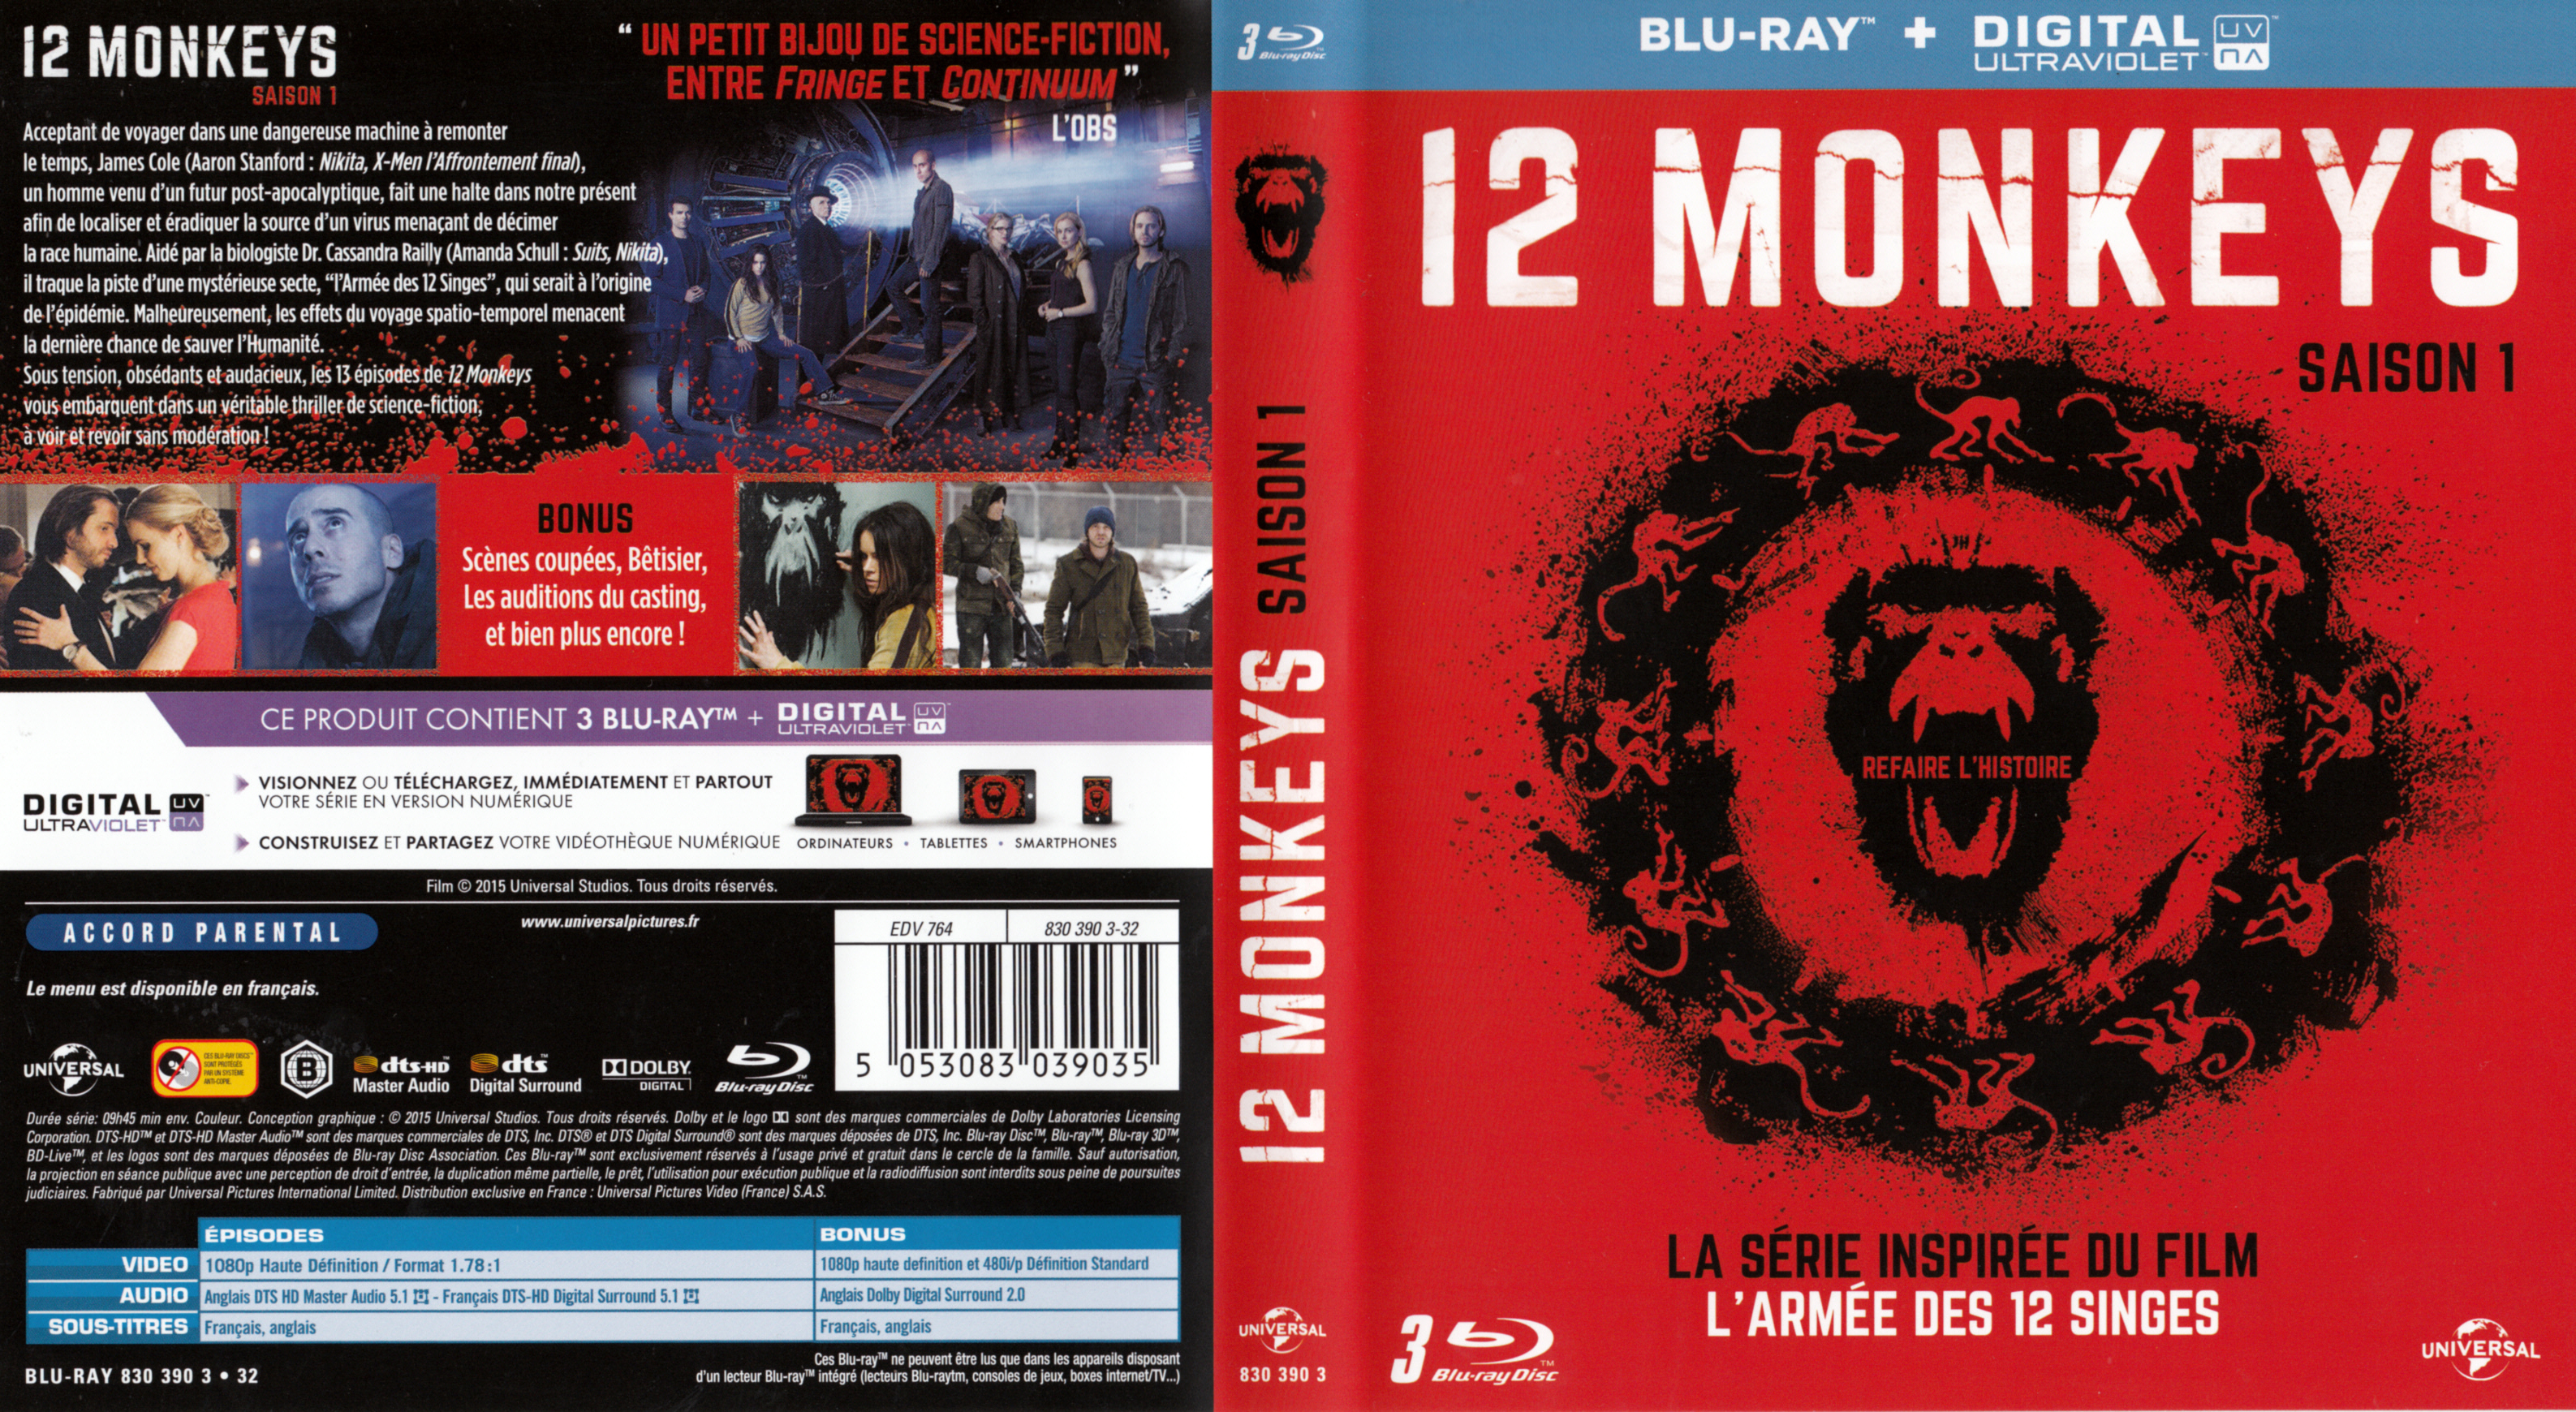 Jaquette DVD 12 Monkeys Saison 1 (BLU-RAY)